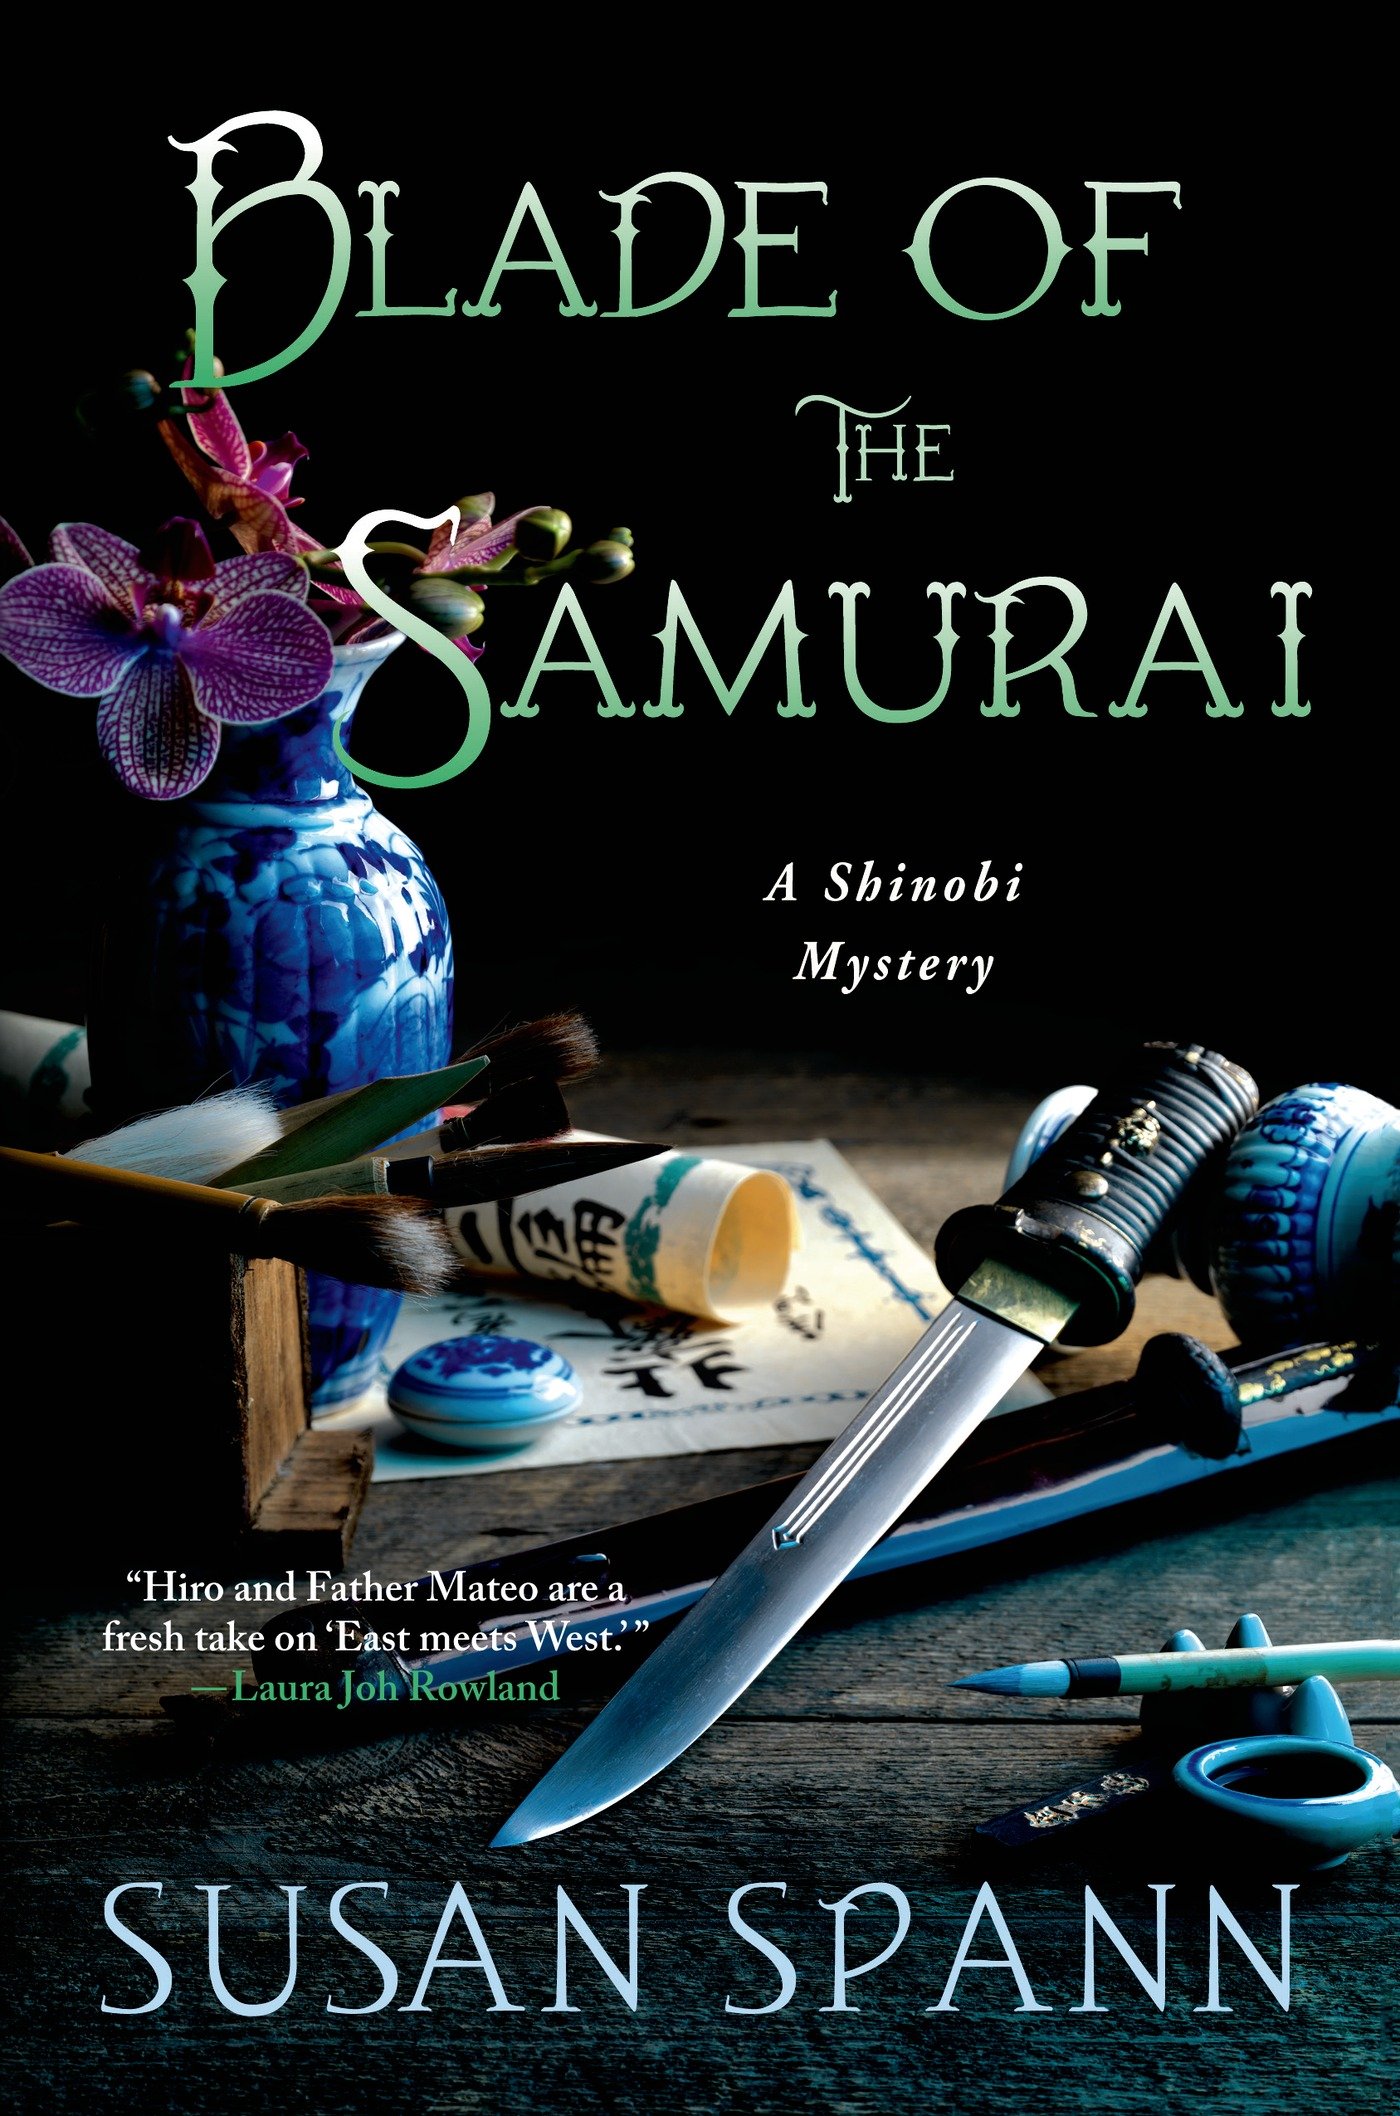 Blade of the Samurai: A Shinobi Mystery